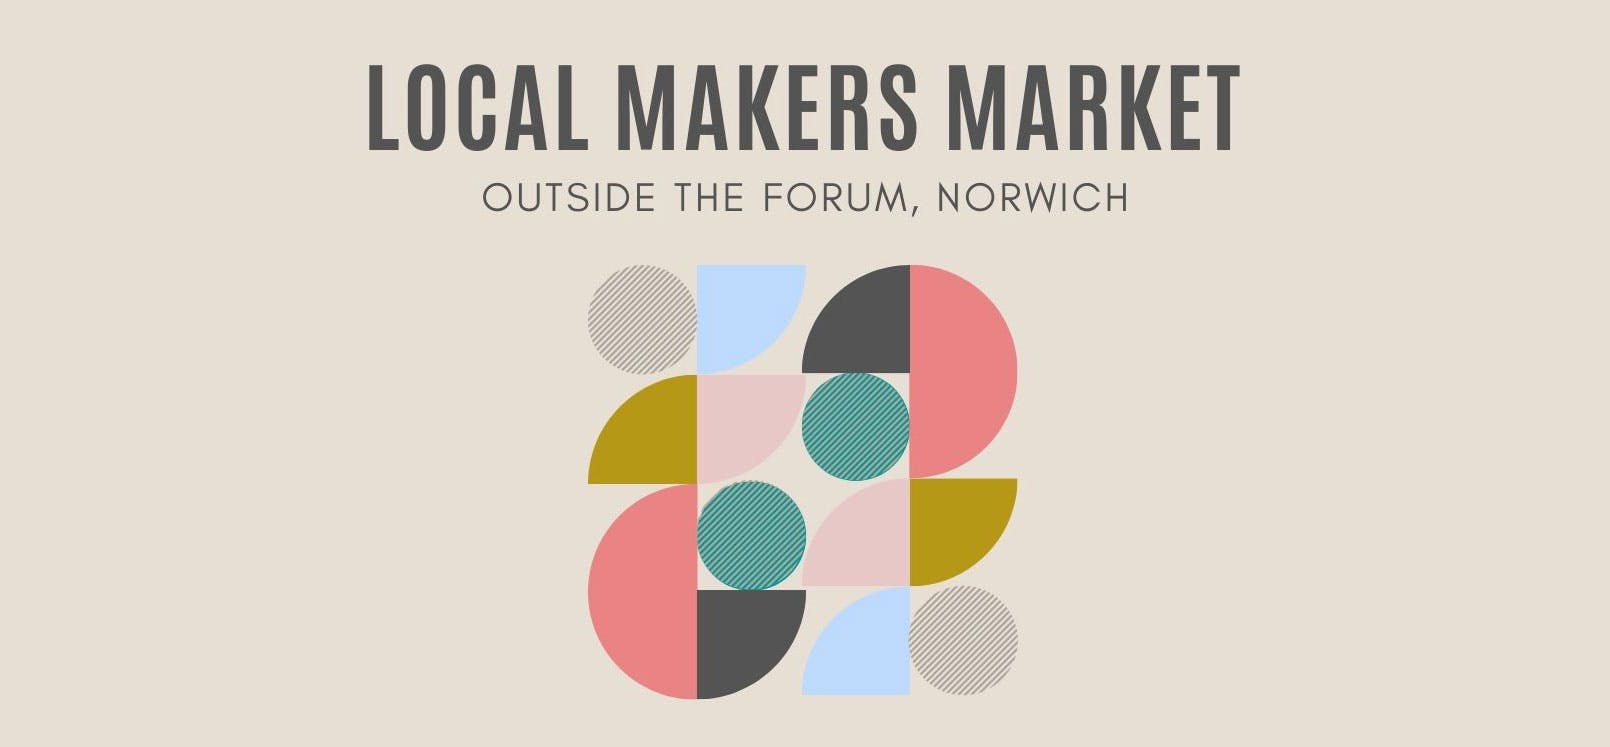 Local Makers Market logo with colourful circles and semi circles